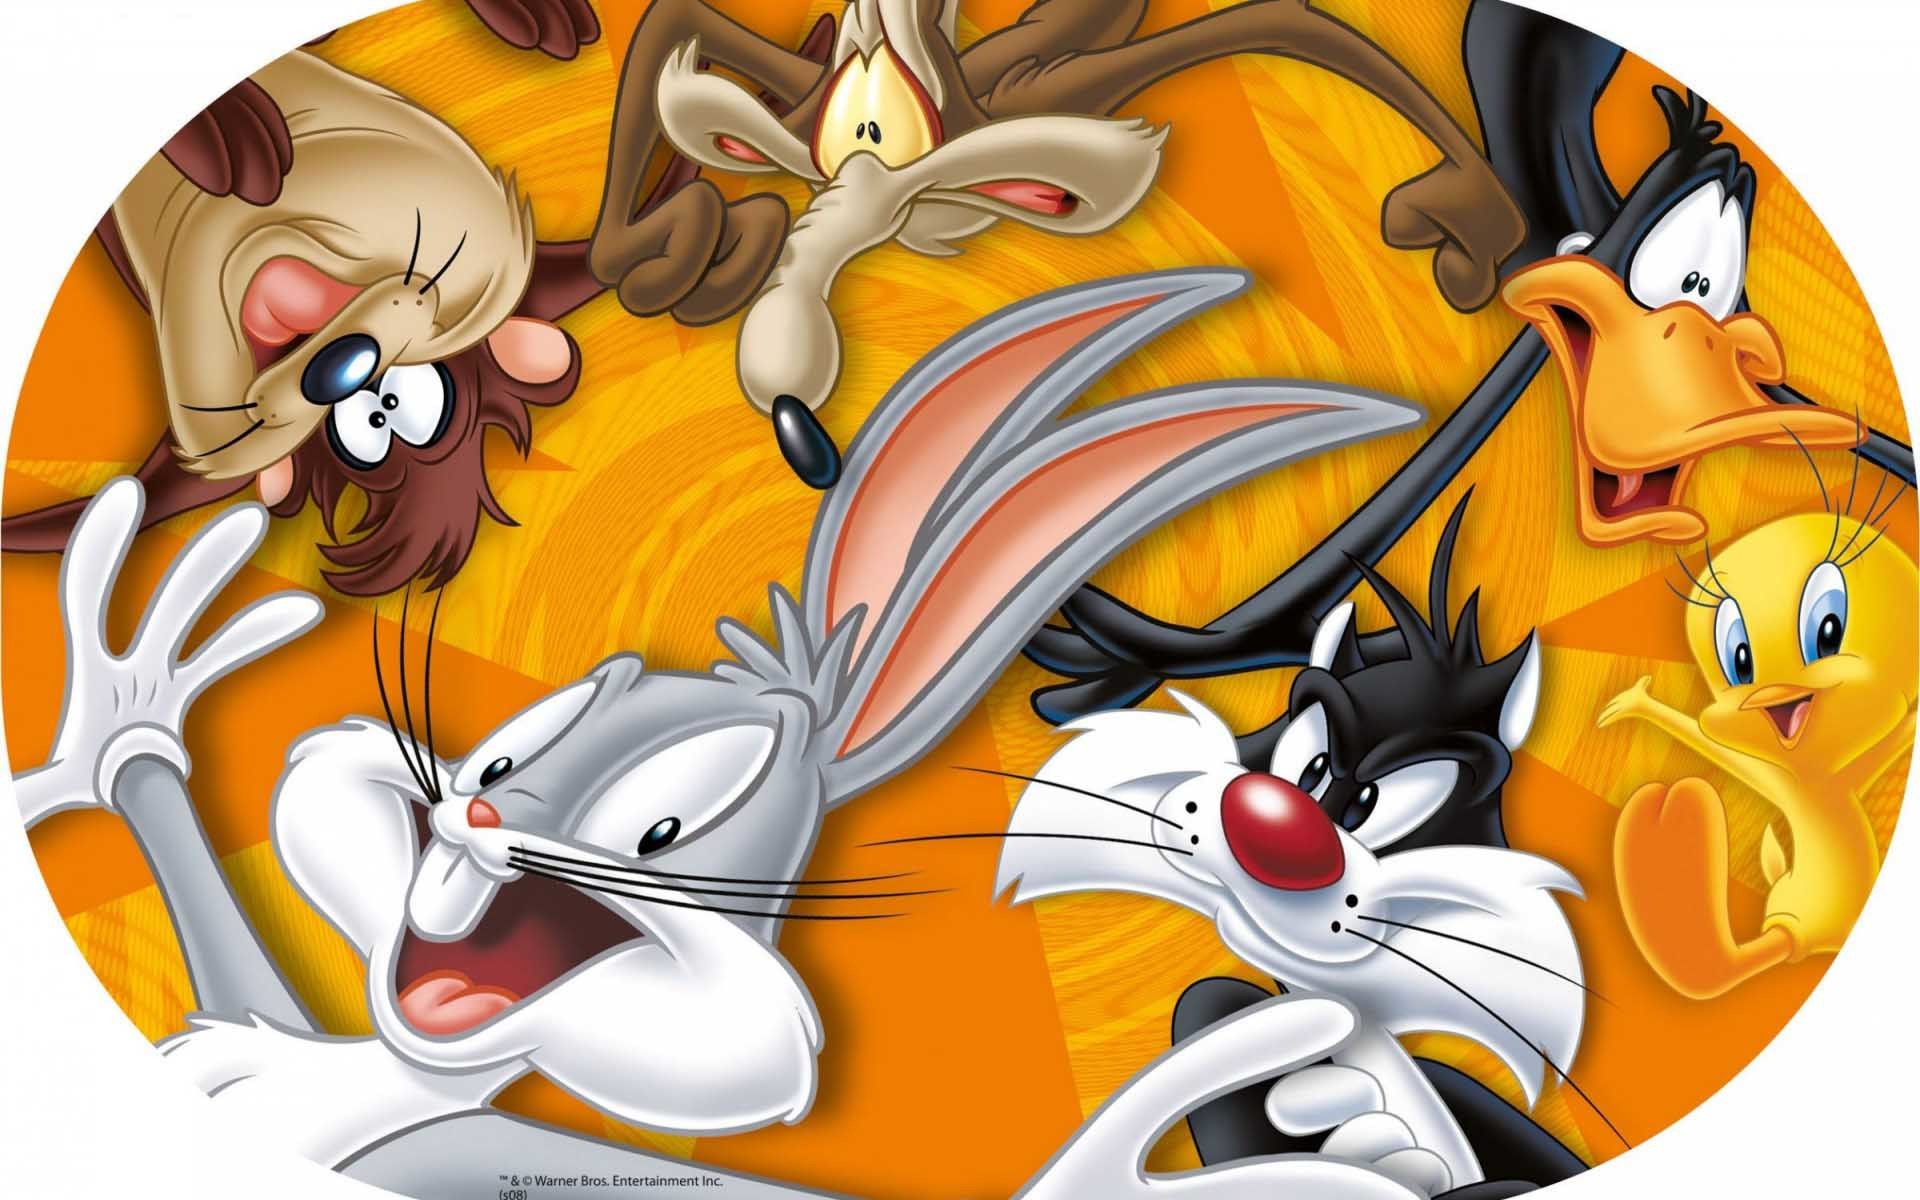 Download Bugs Bunny Wallpapers in HD for Desktop